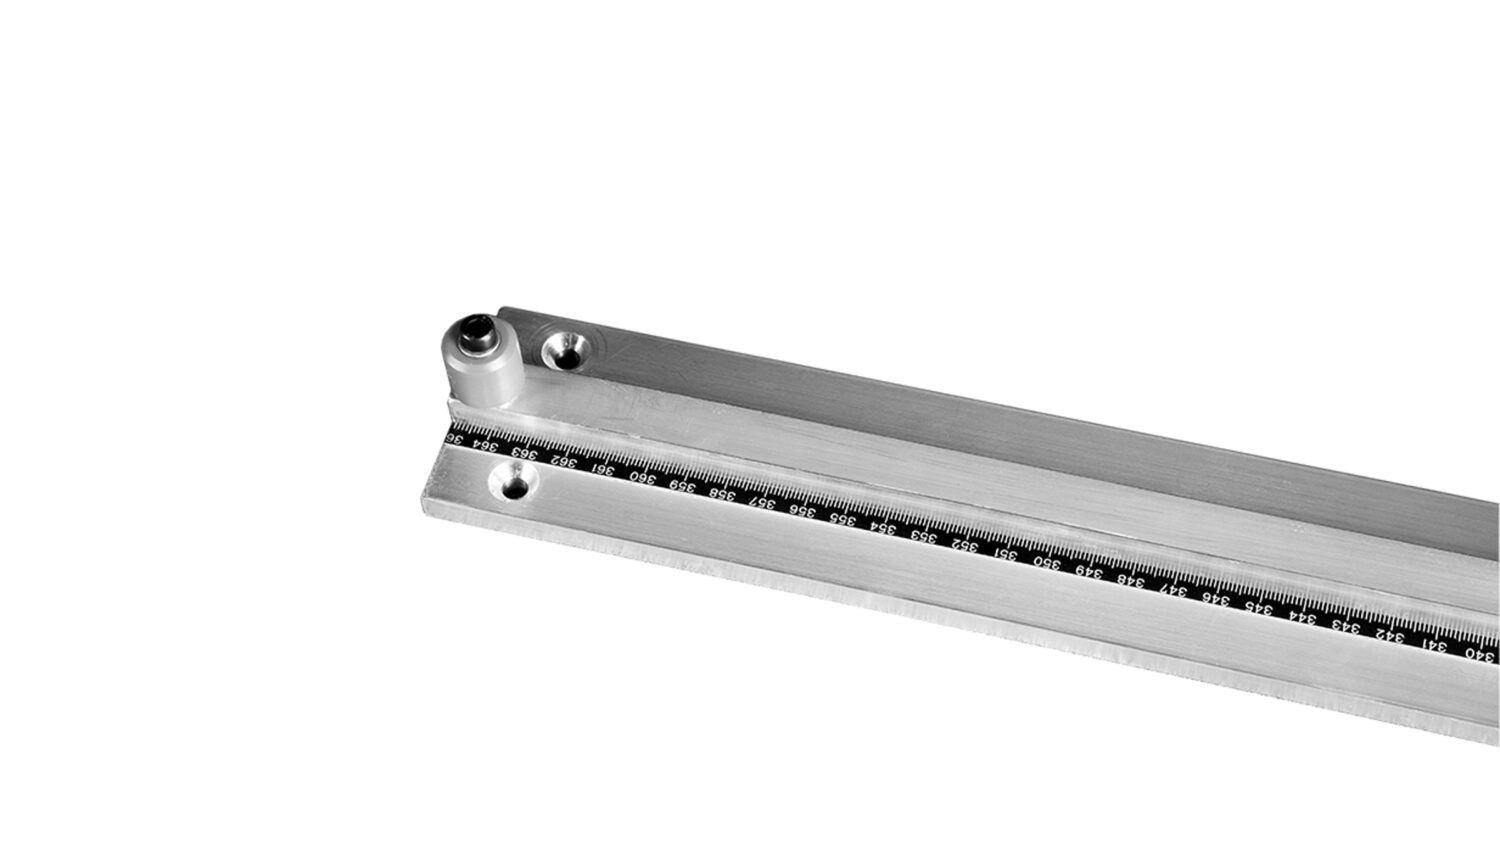 FOBA milimetre scale for floor rail for a studio stand (Vermessung, Halterung, Positionierung)